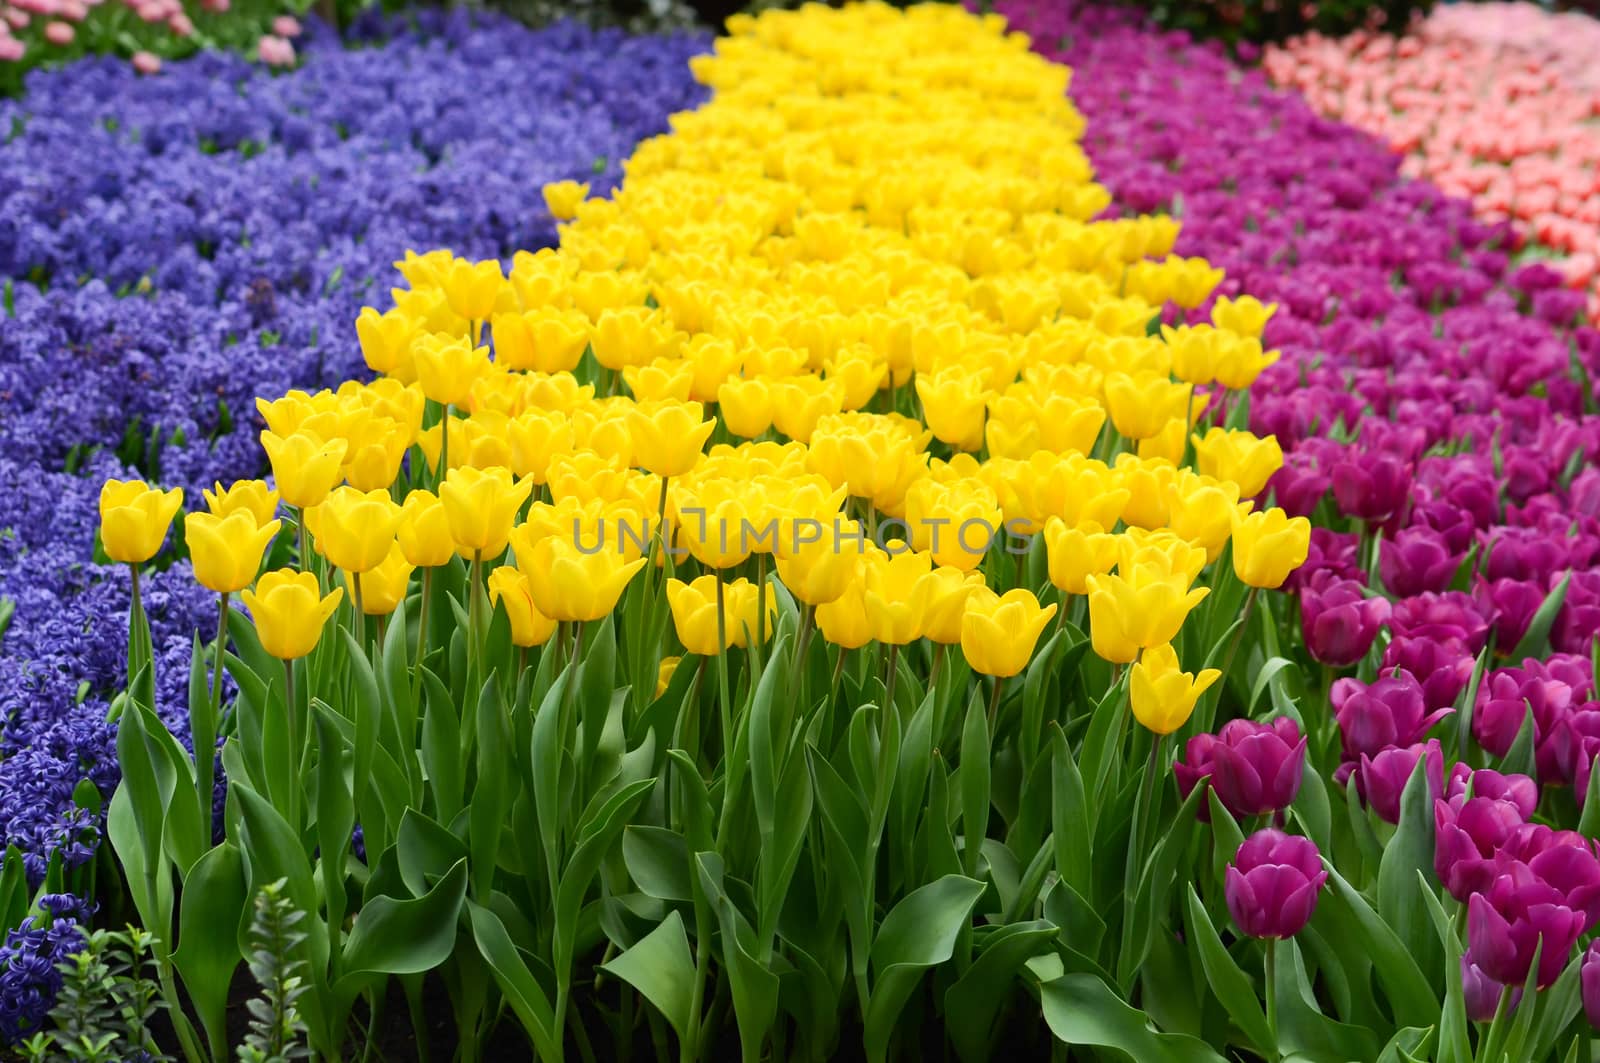 field of tulips by nop16